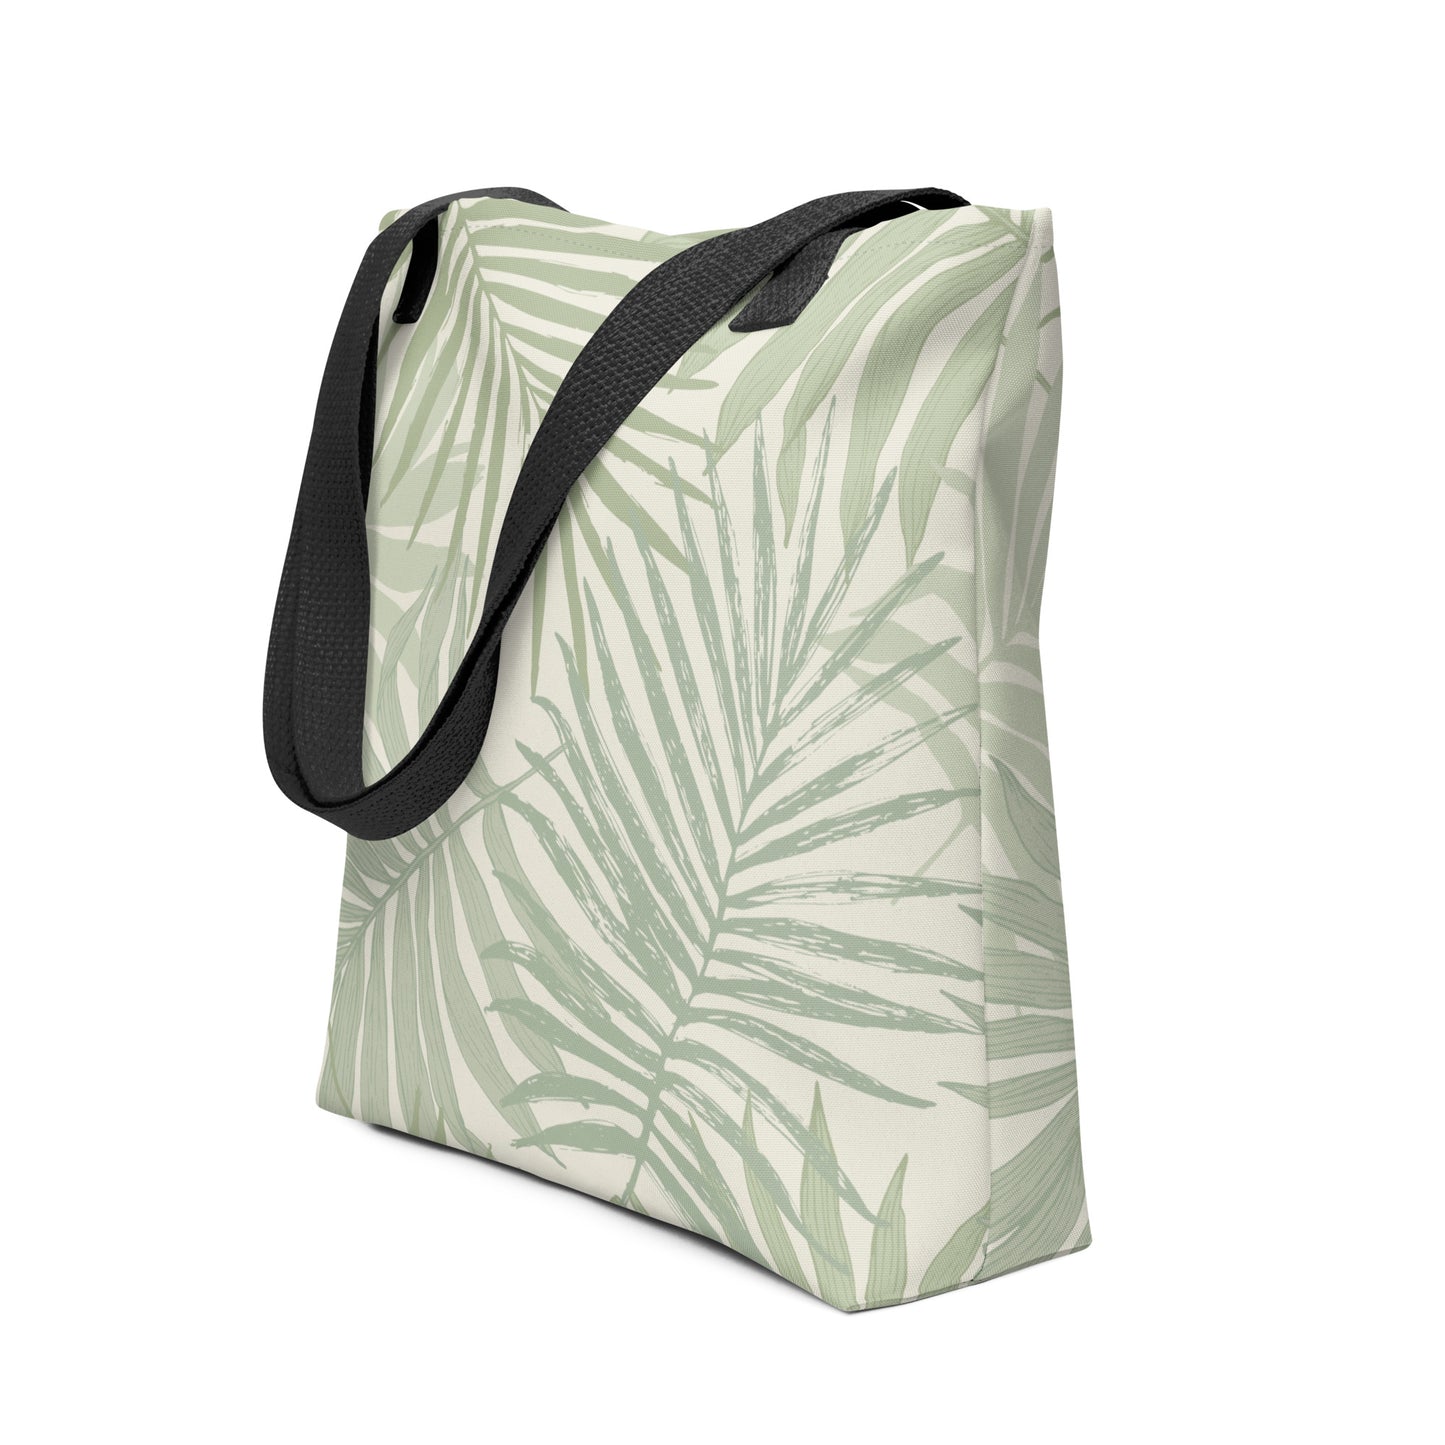 Green Palms Tote Bag